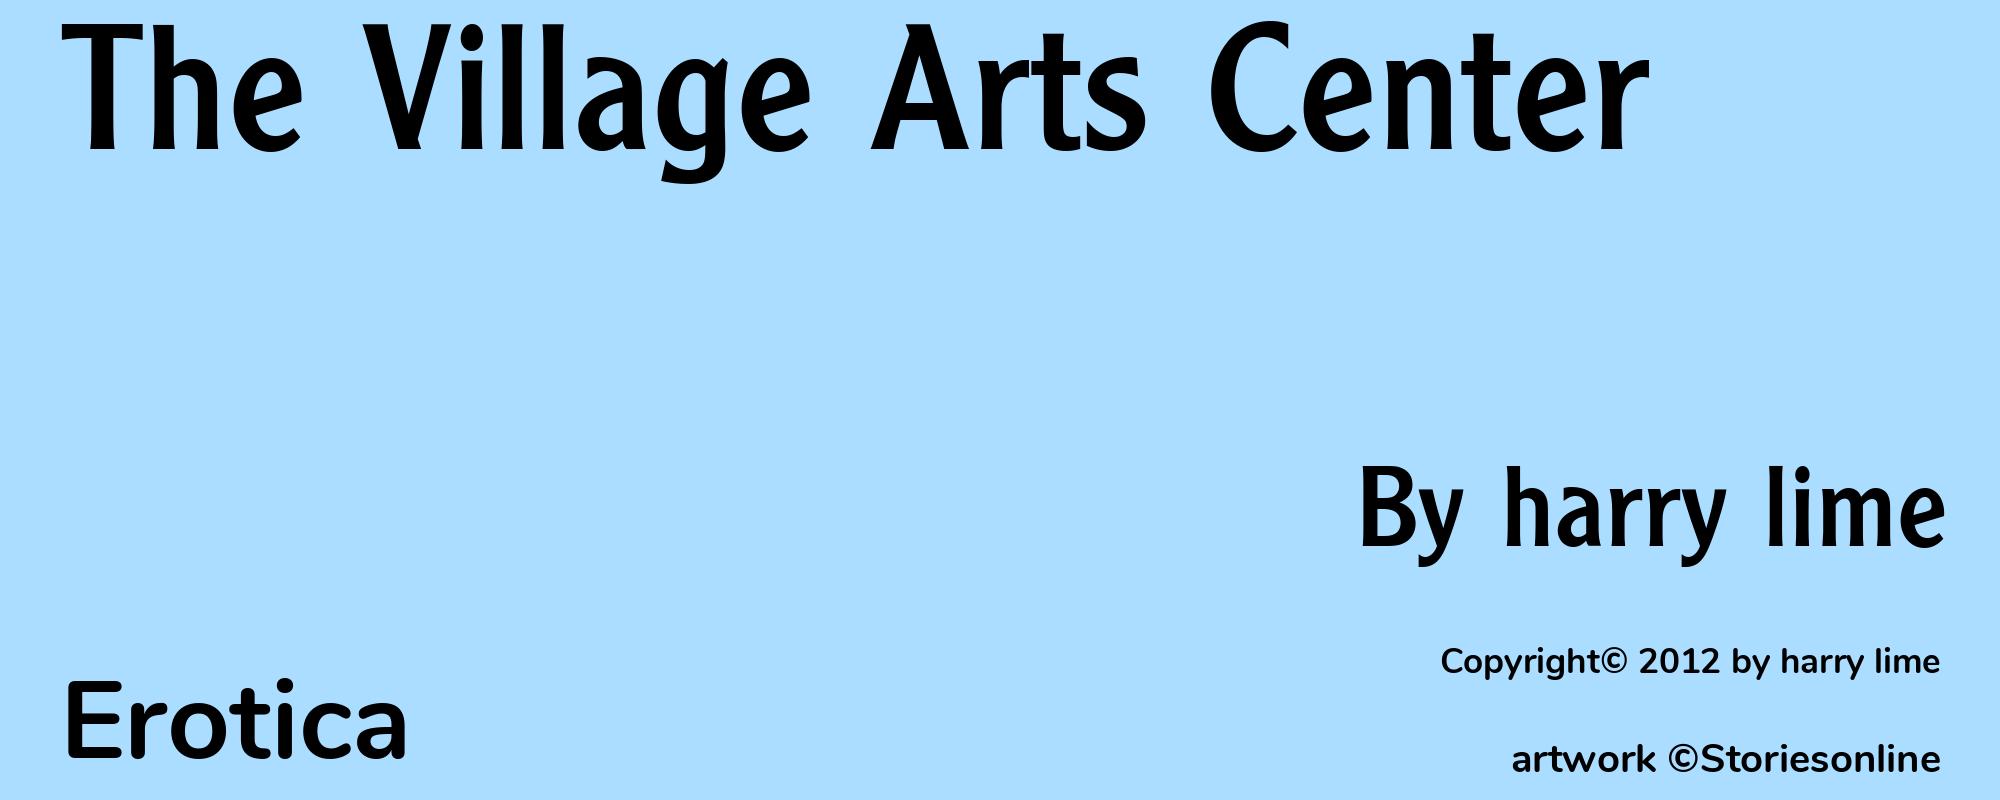 The Village Arts Center - Cover